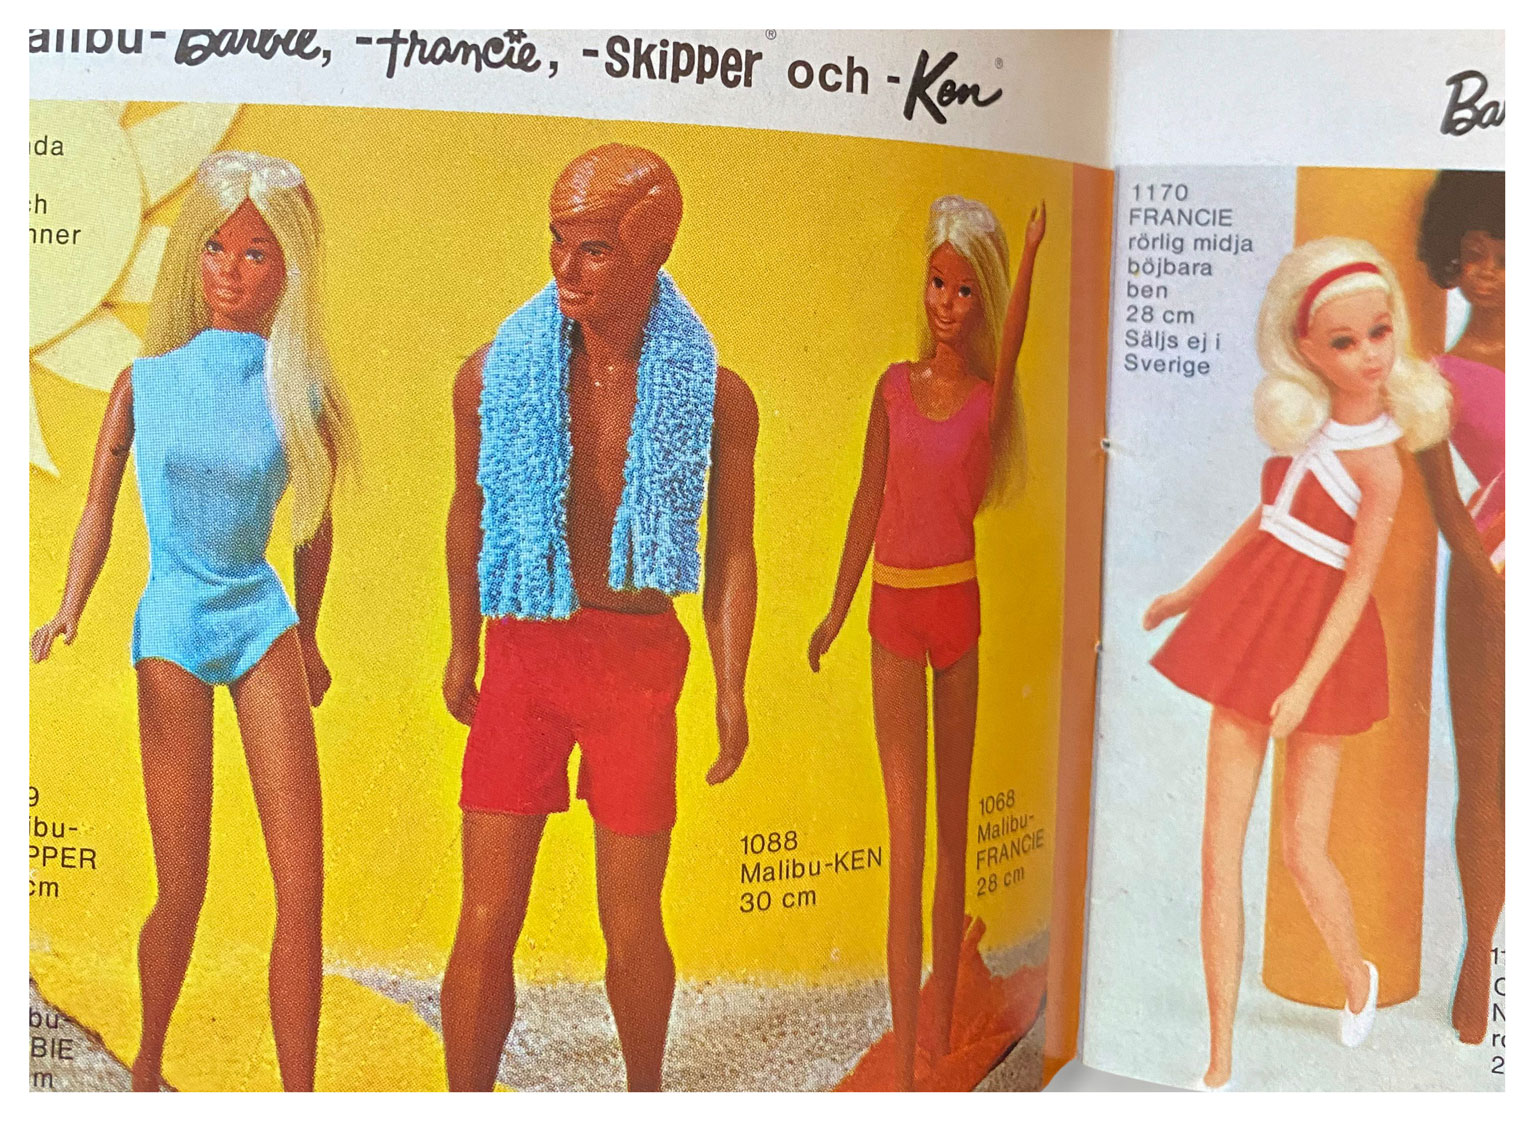 From 1972 Swedish Barbies Värld booklet